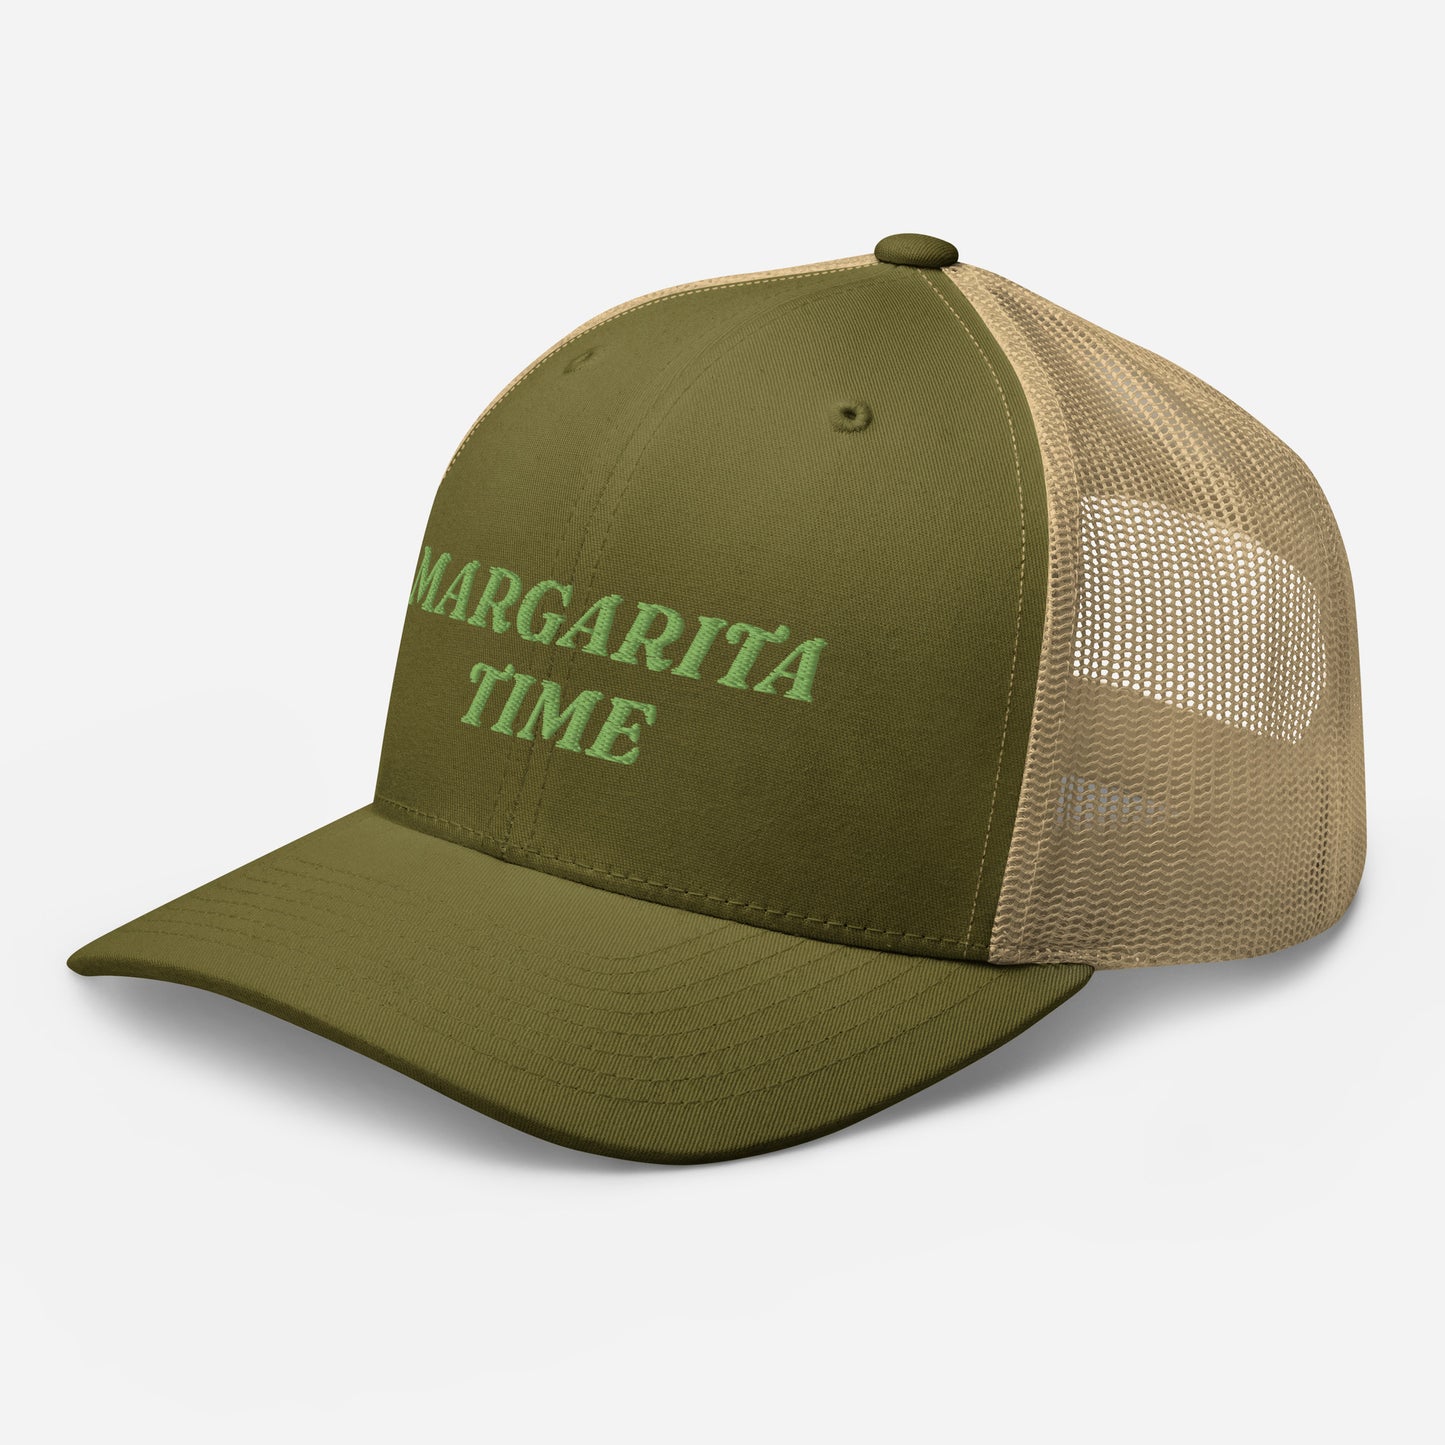 Margarita Time | Retro Trucker Hat | Embroidered